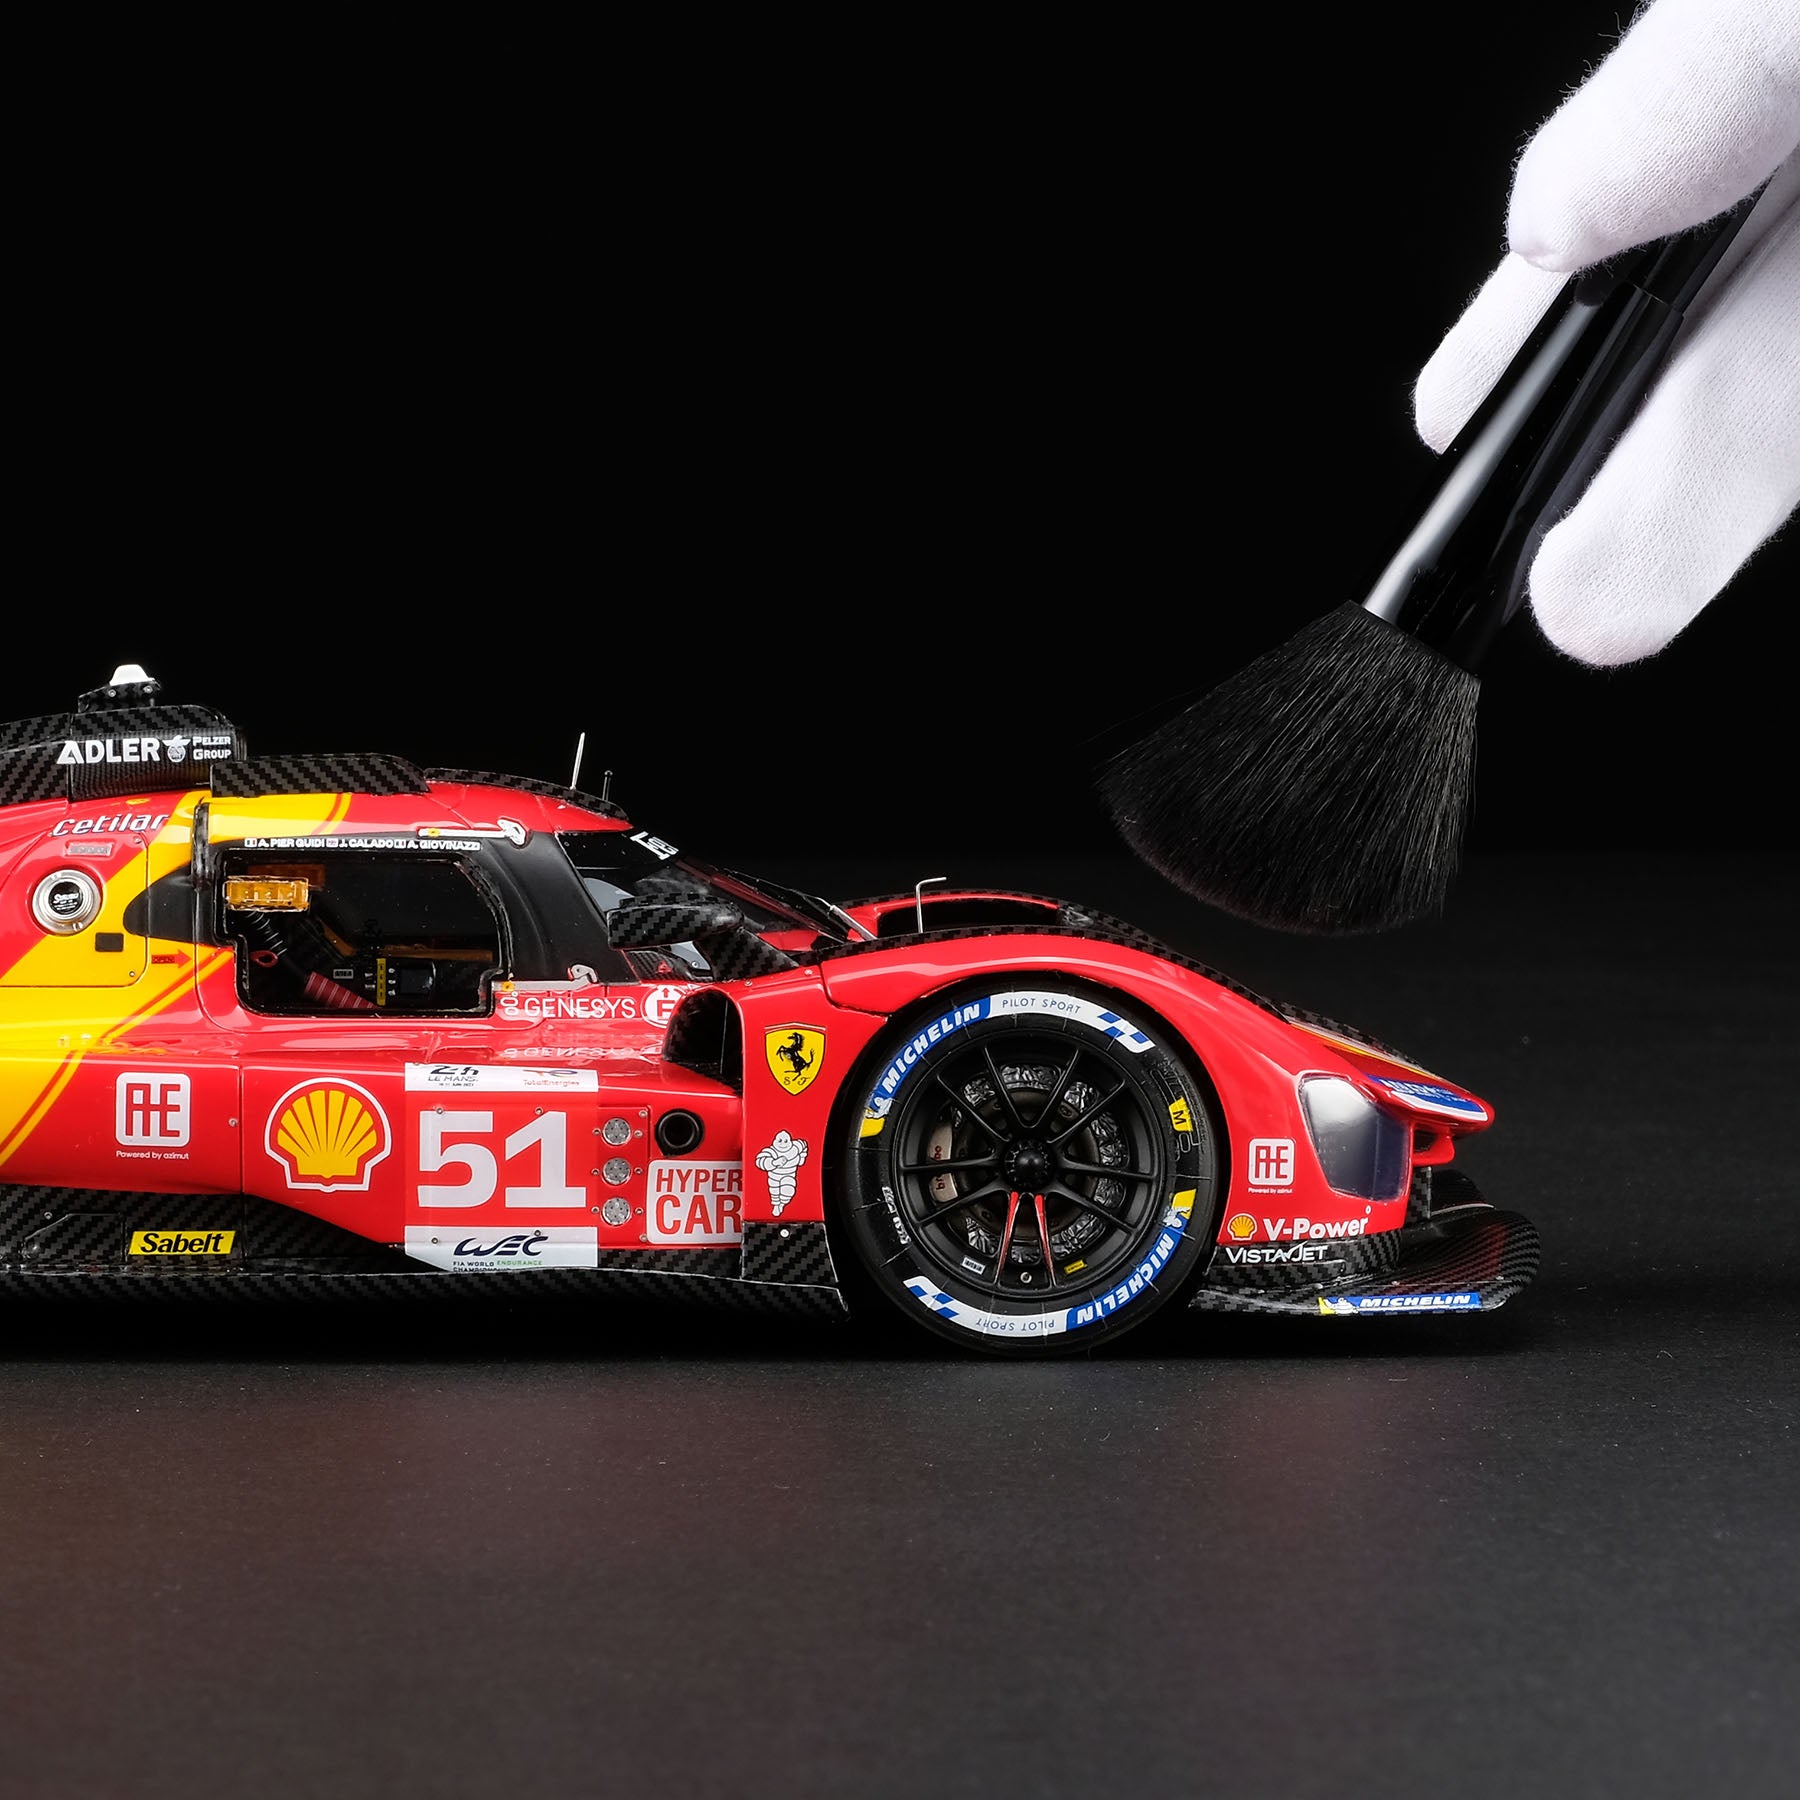 Ferrari 499P at 1:18 scale